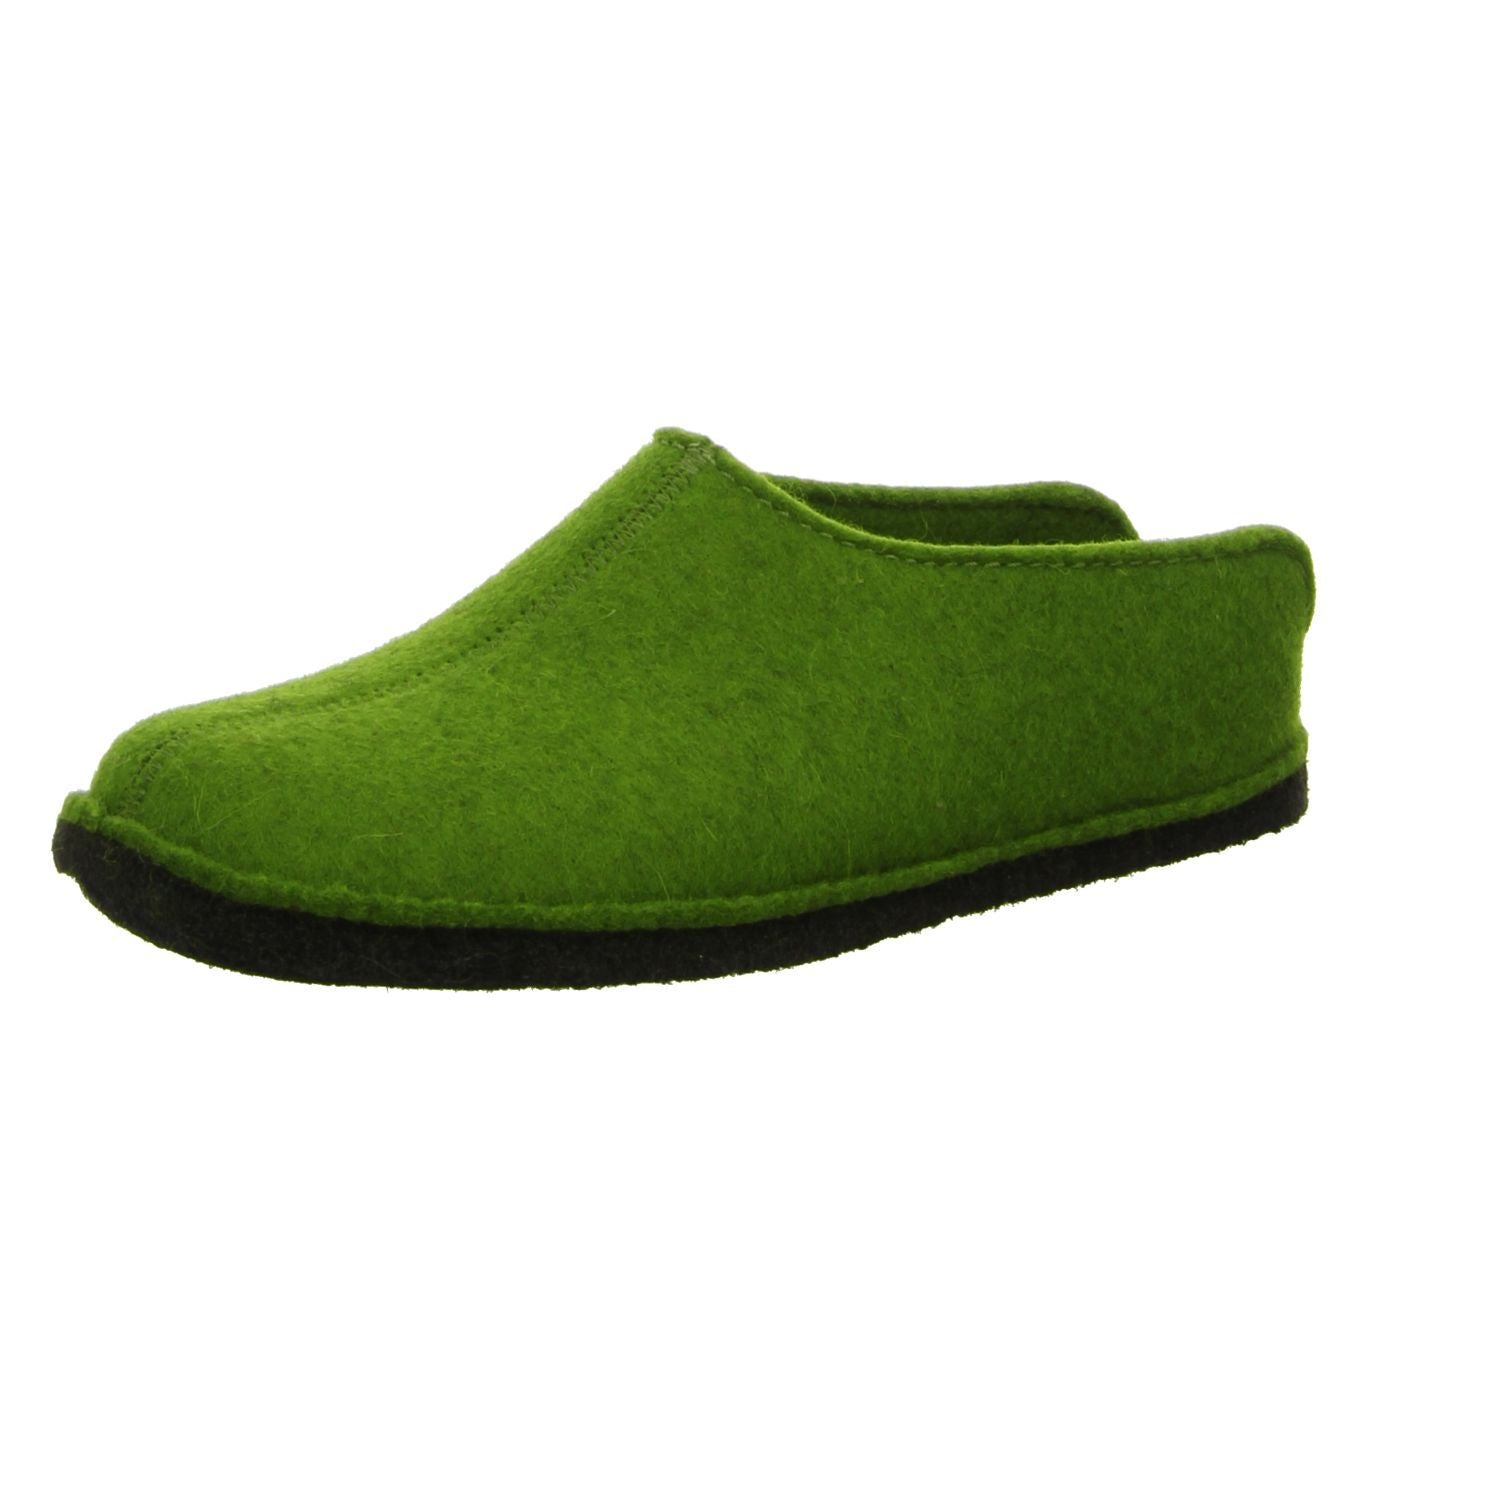 Haflinger Flair Slippers Clogs Mules Wool Felt Scuffs Slip On House Shoes green - Bartel-Shop